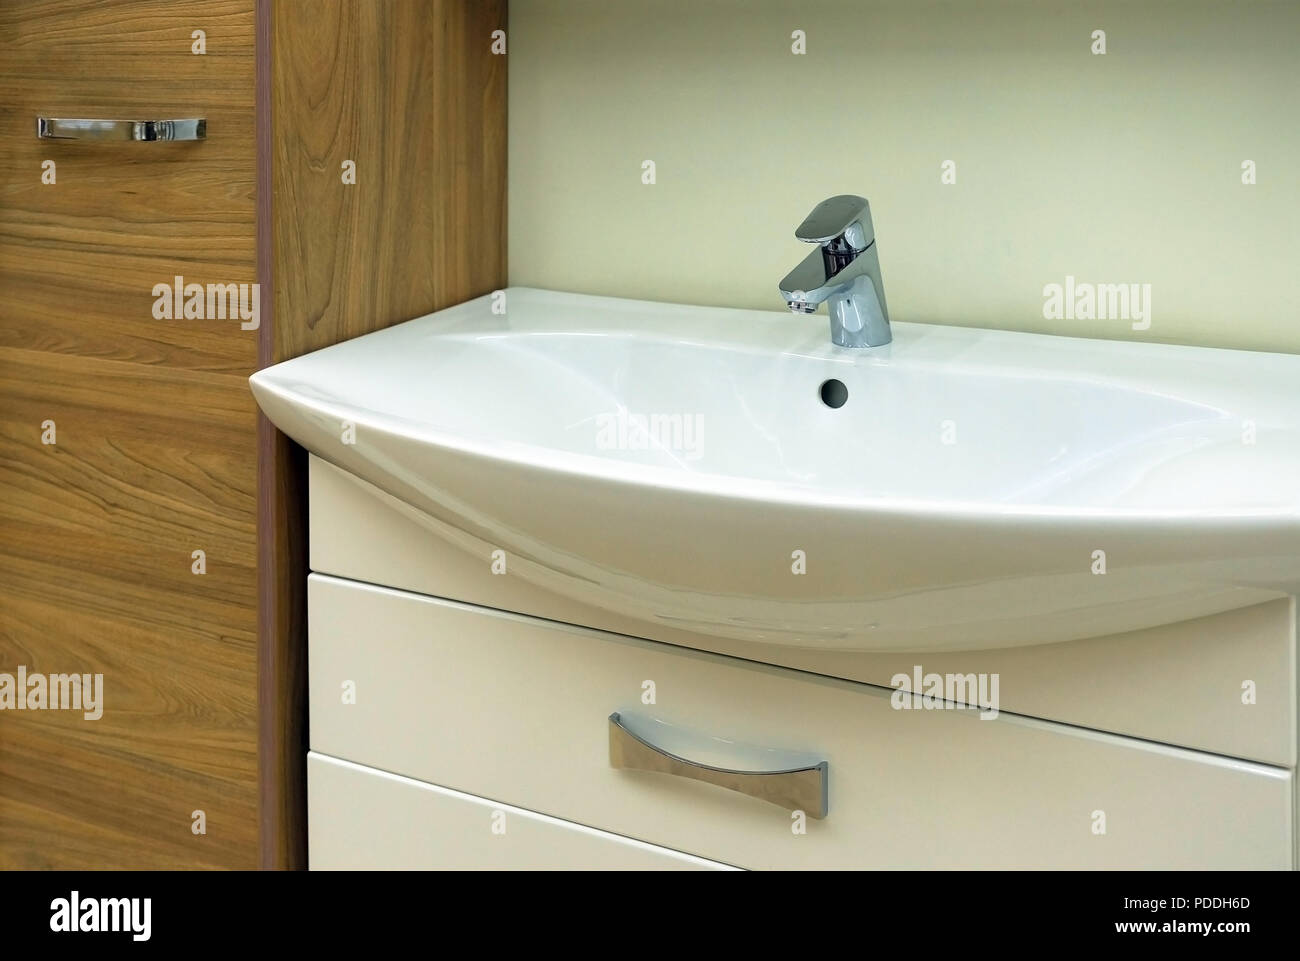 Wash Basin Modern Sink In The Bathroom Yellow Water Mixer Stock Photo Alamy